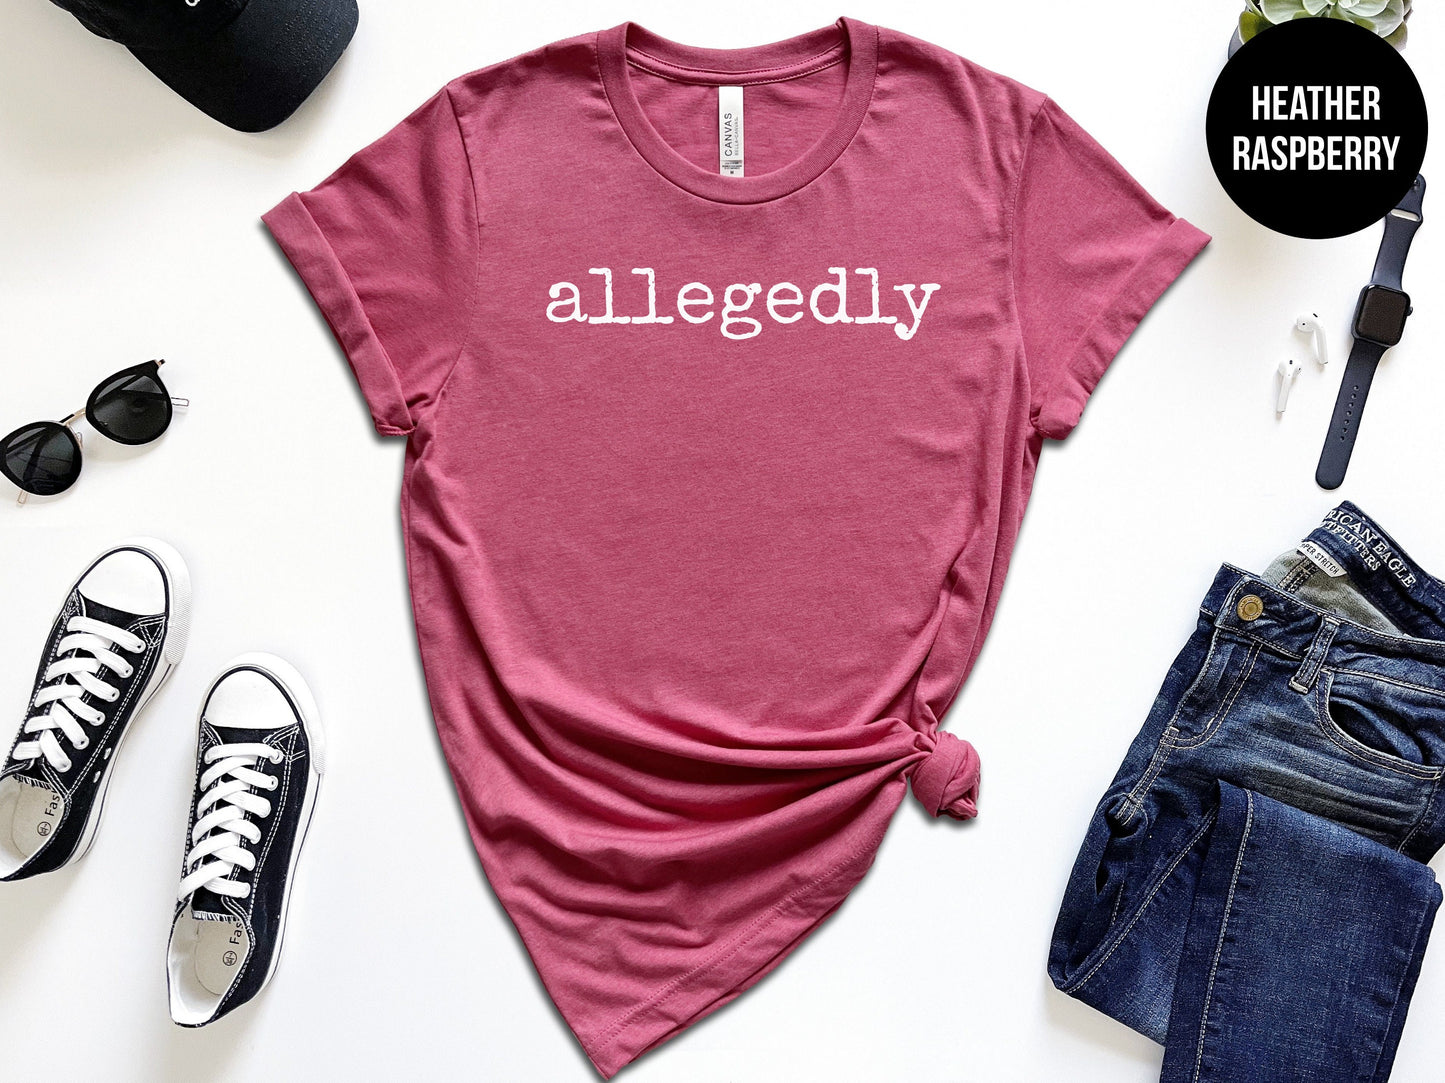 Allegedly Shirt